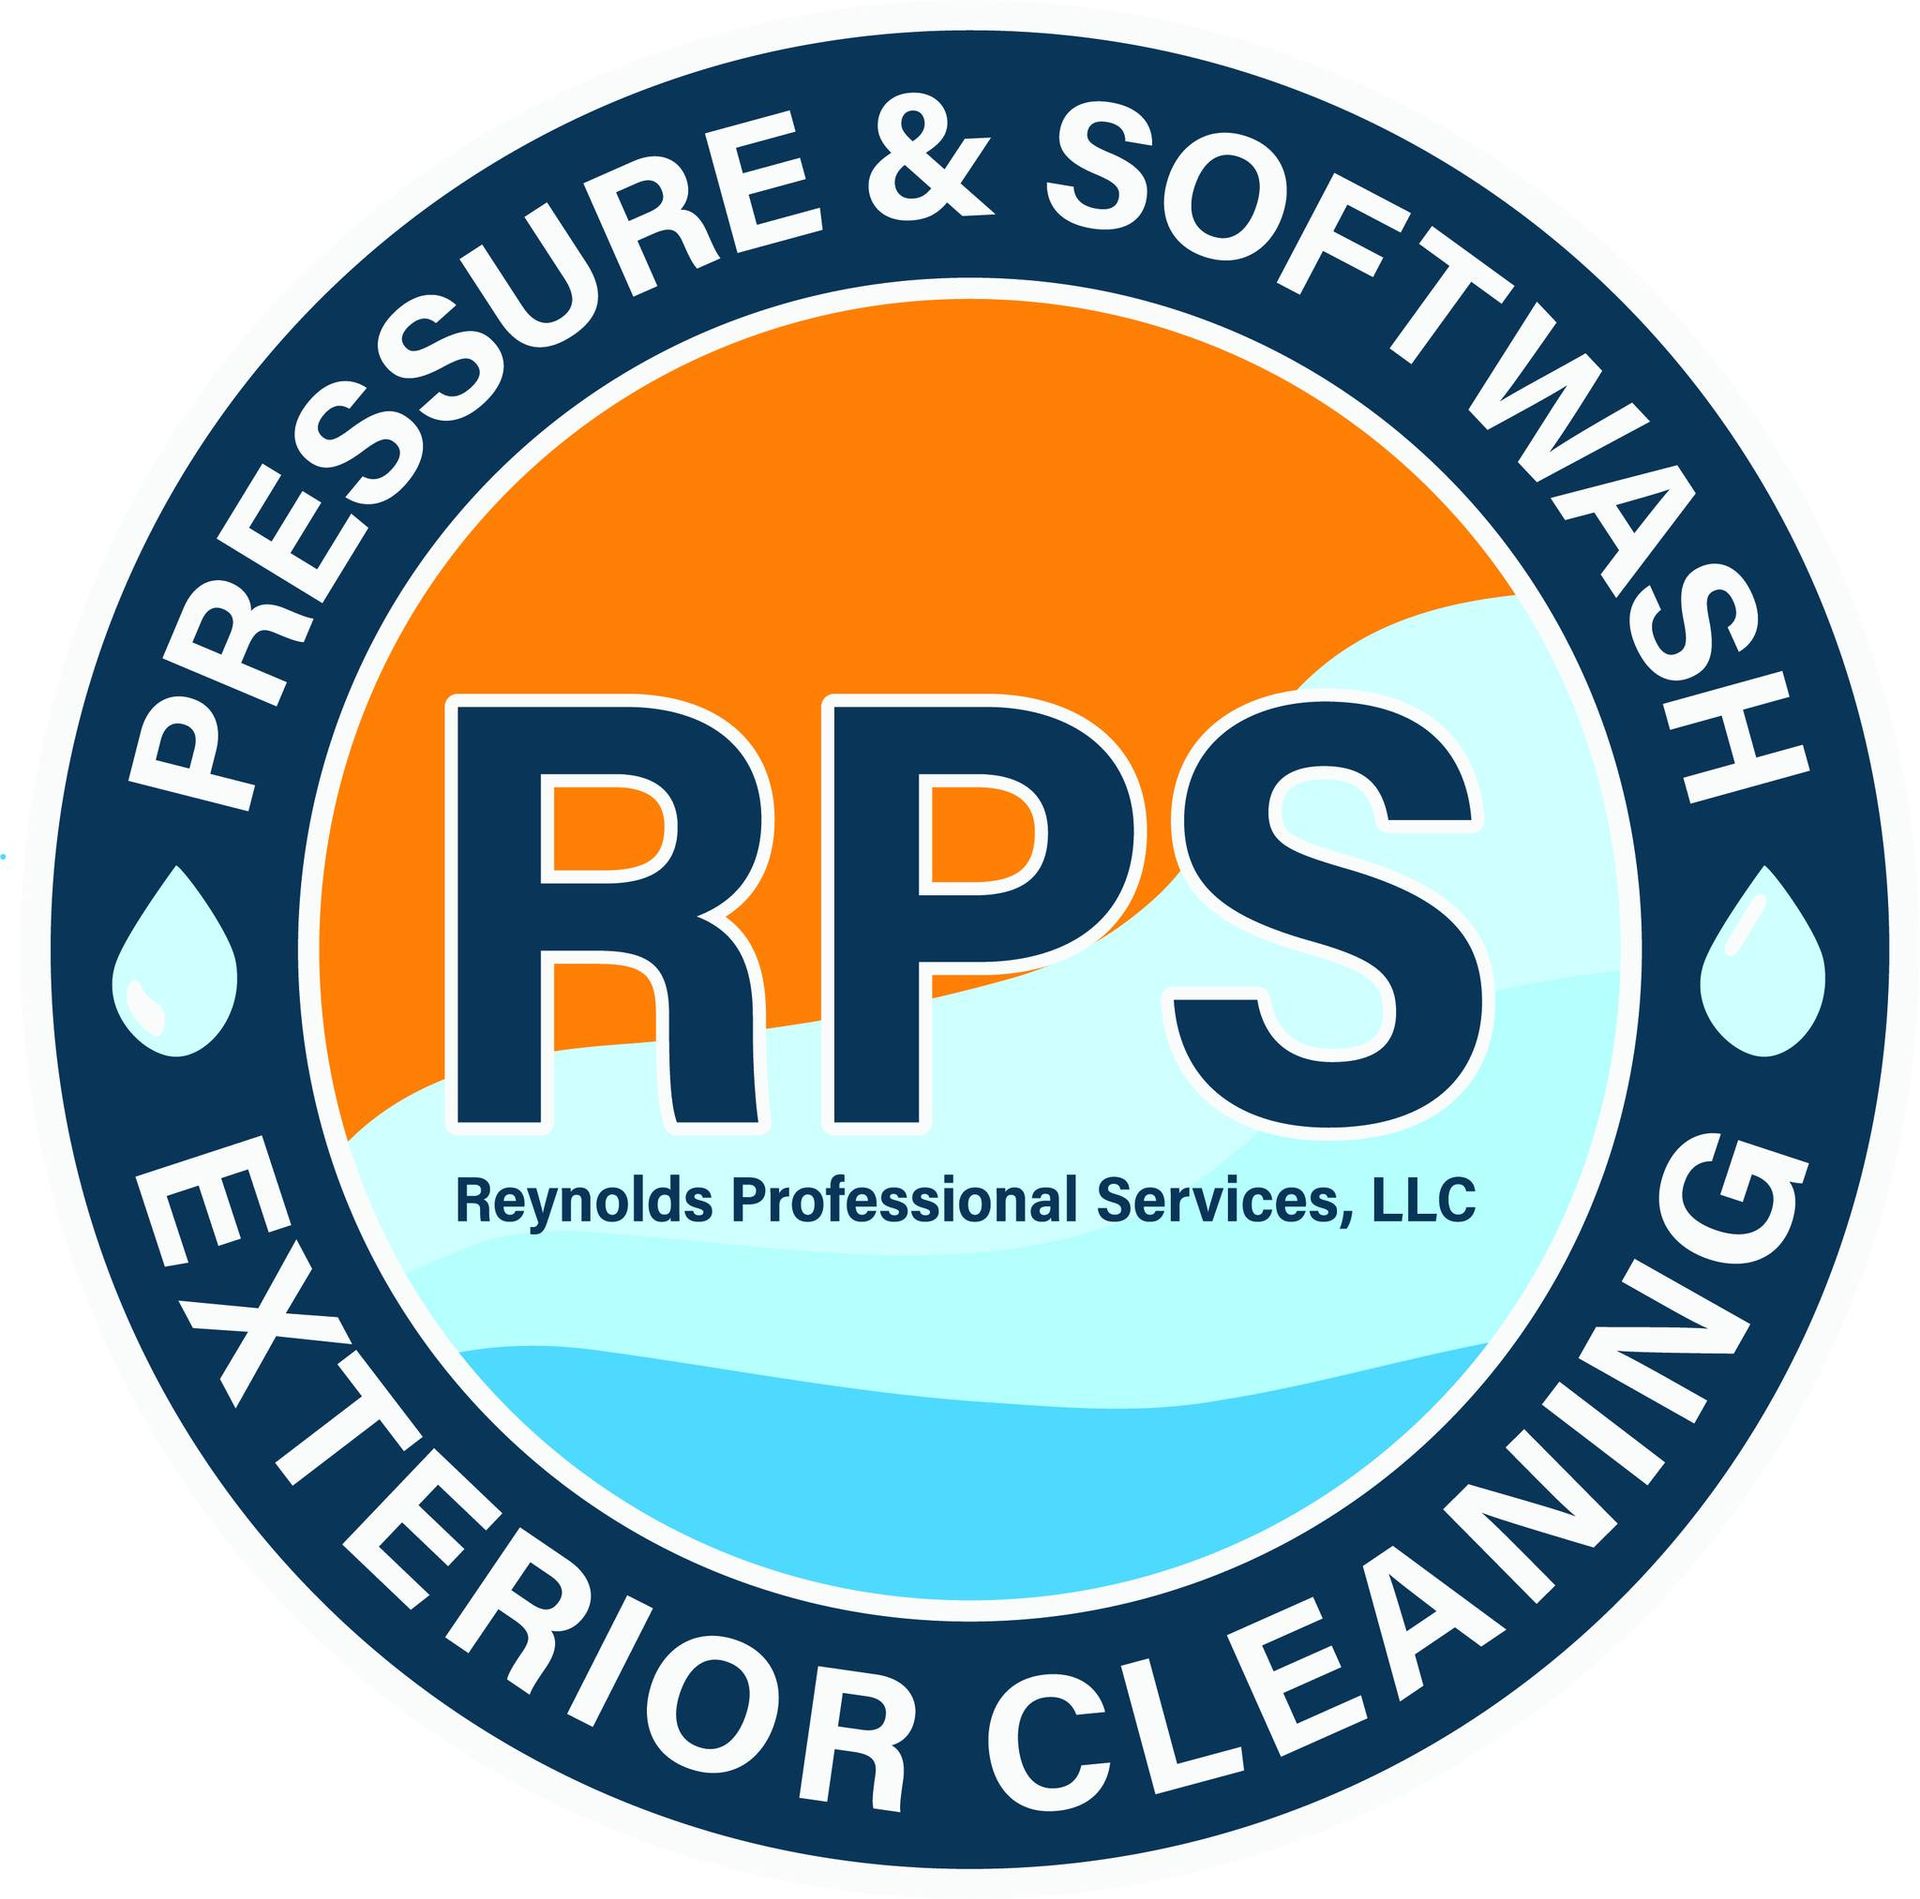 Reynolds Professional Services LLC